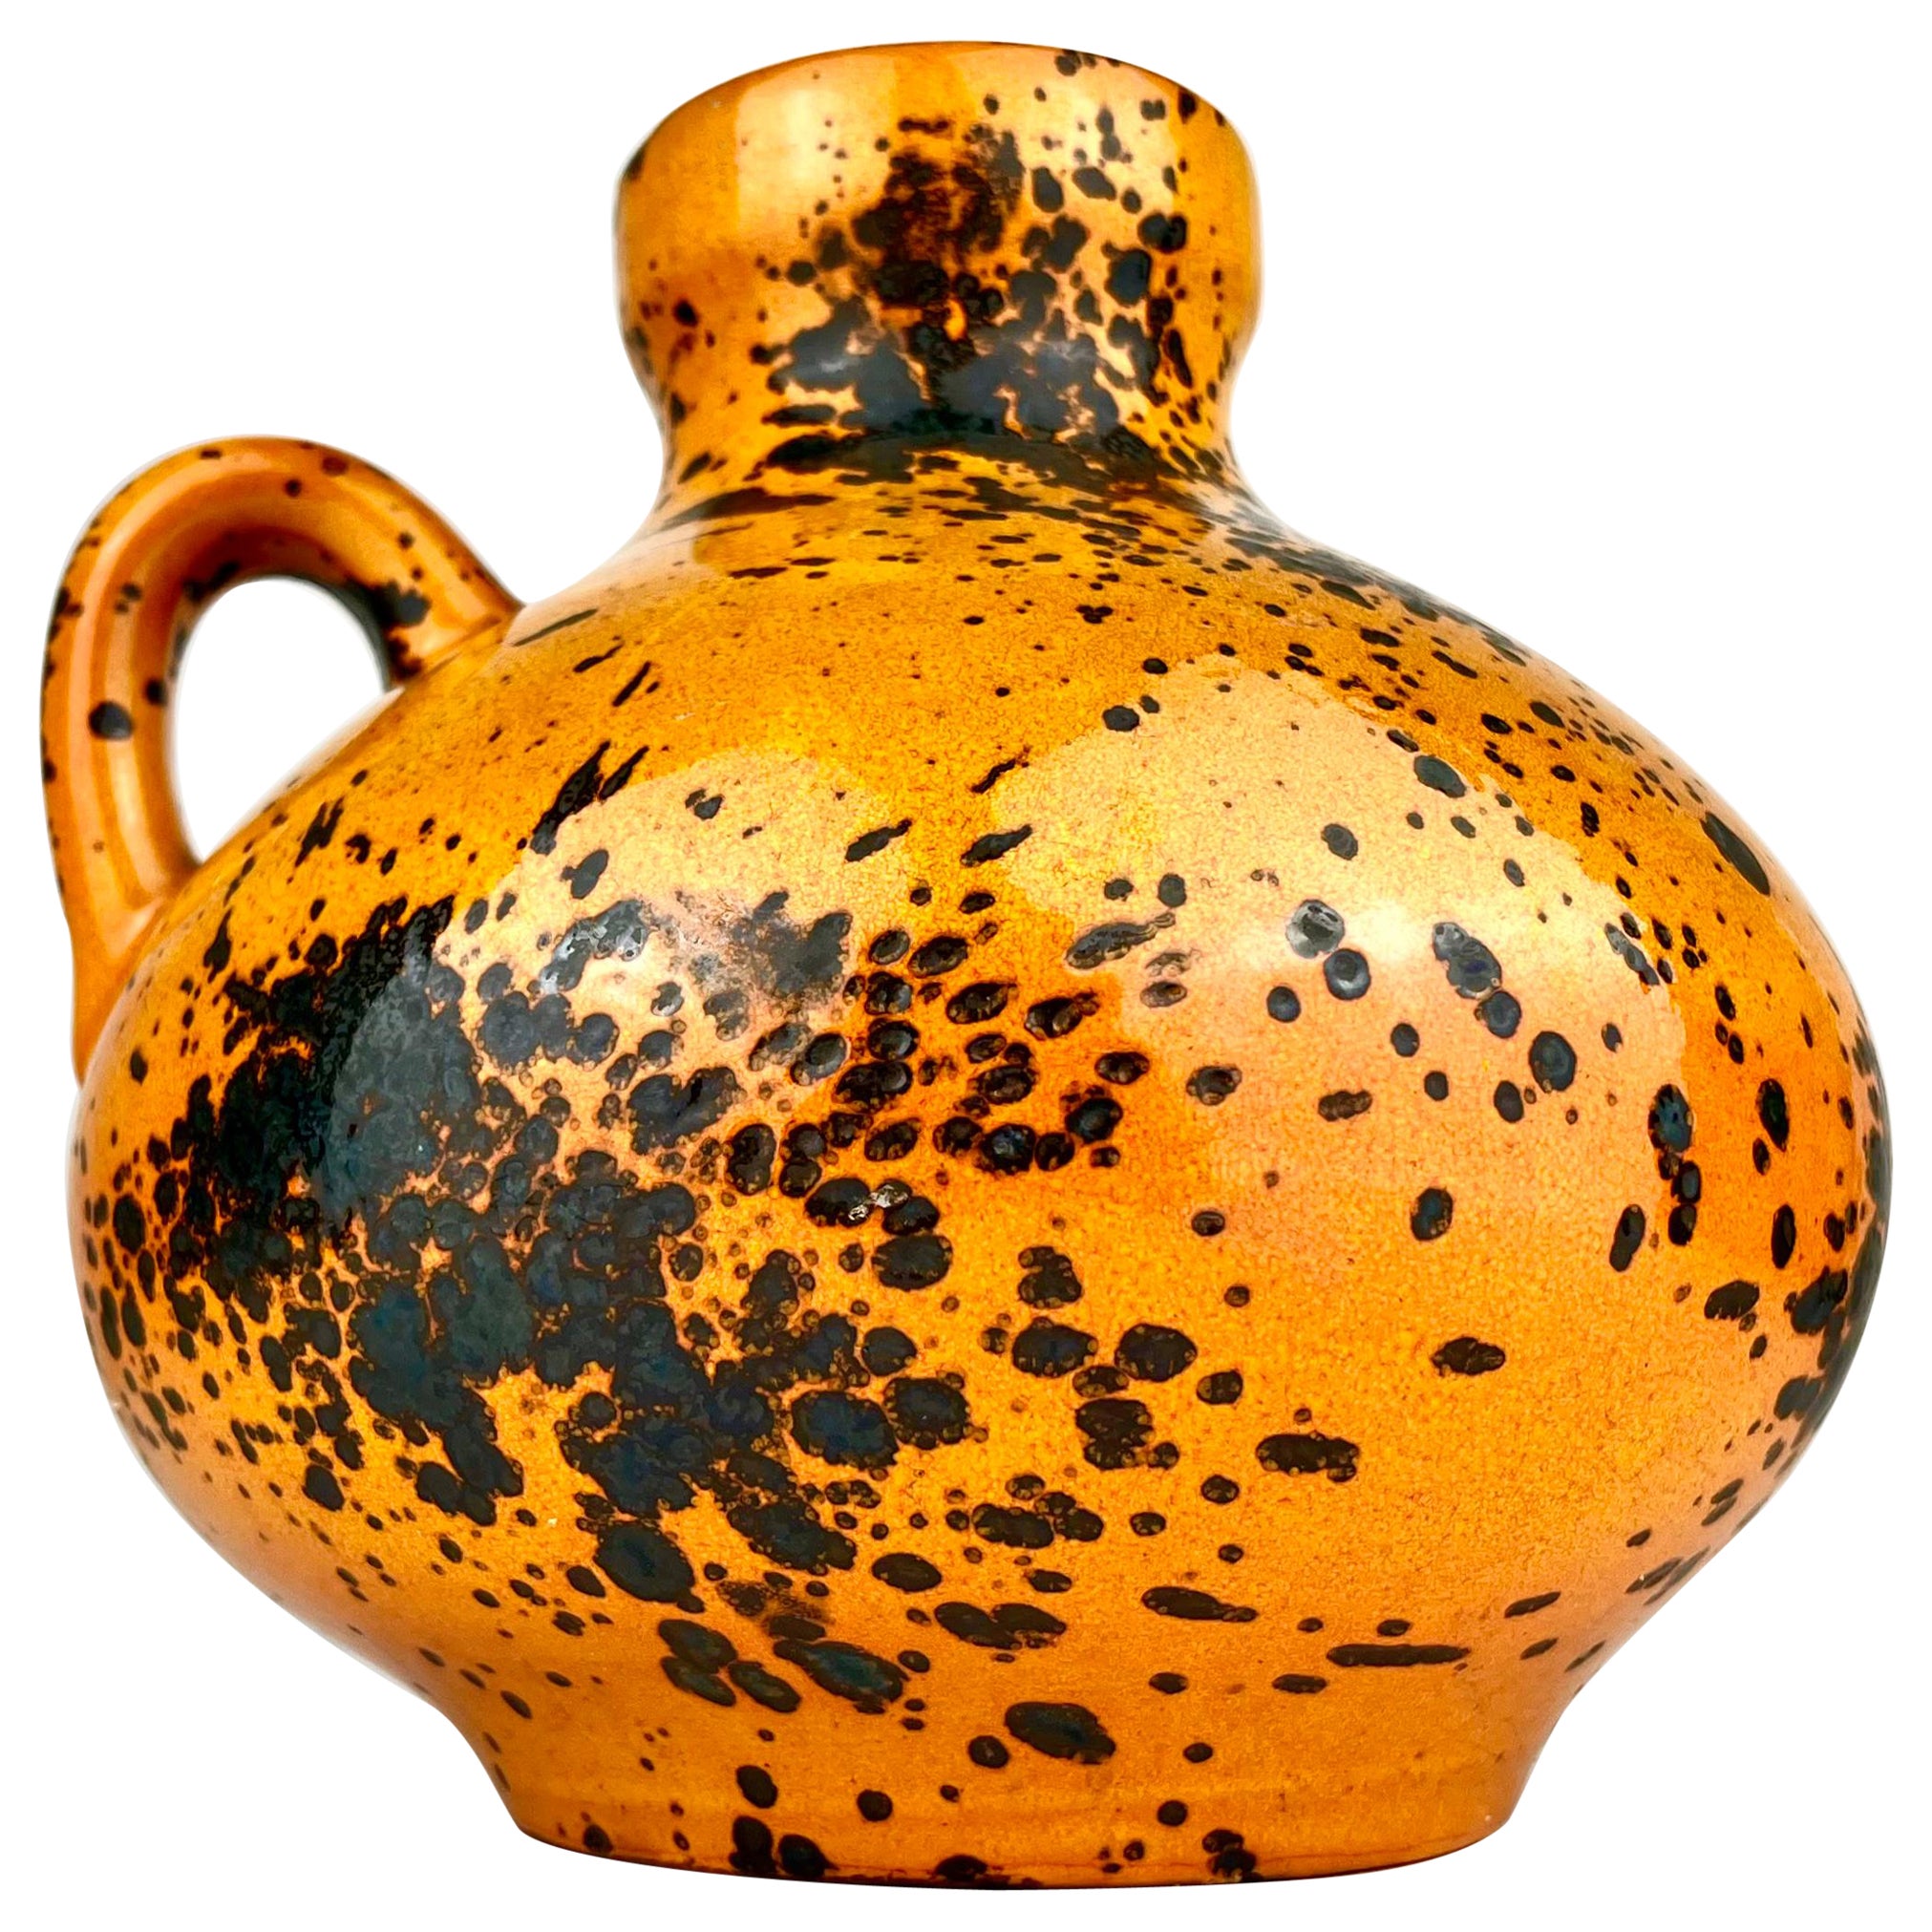 Marei Keramik 4302 West German Vase Jug 1960s Yellow West German Pottery WGC